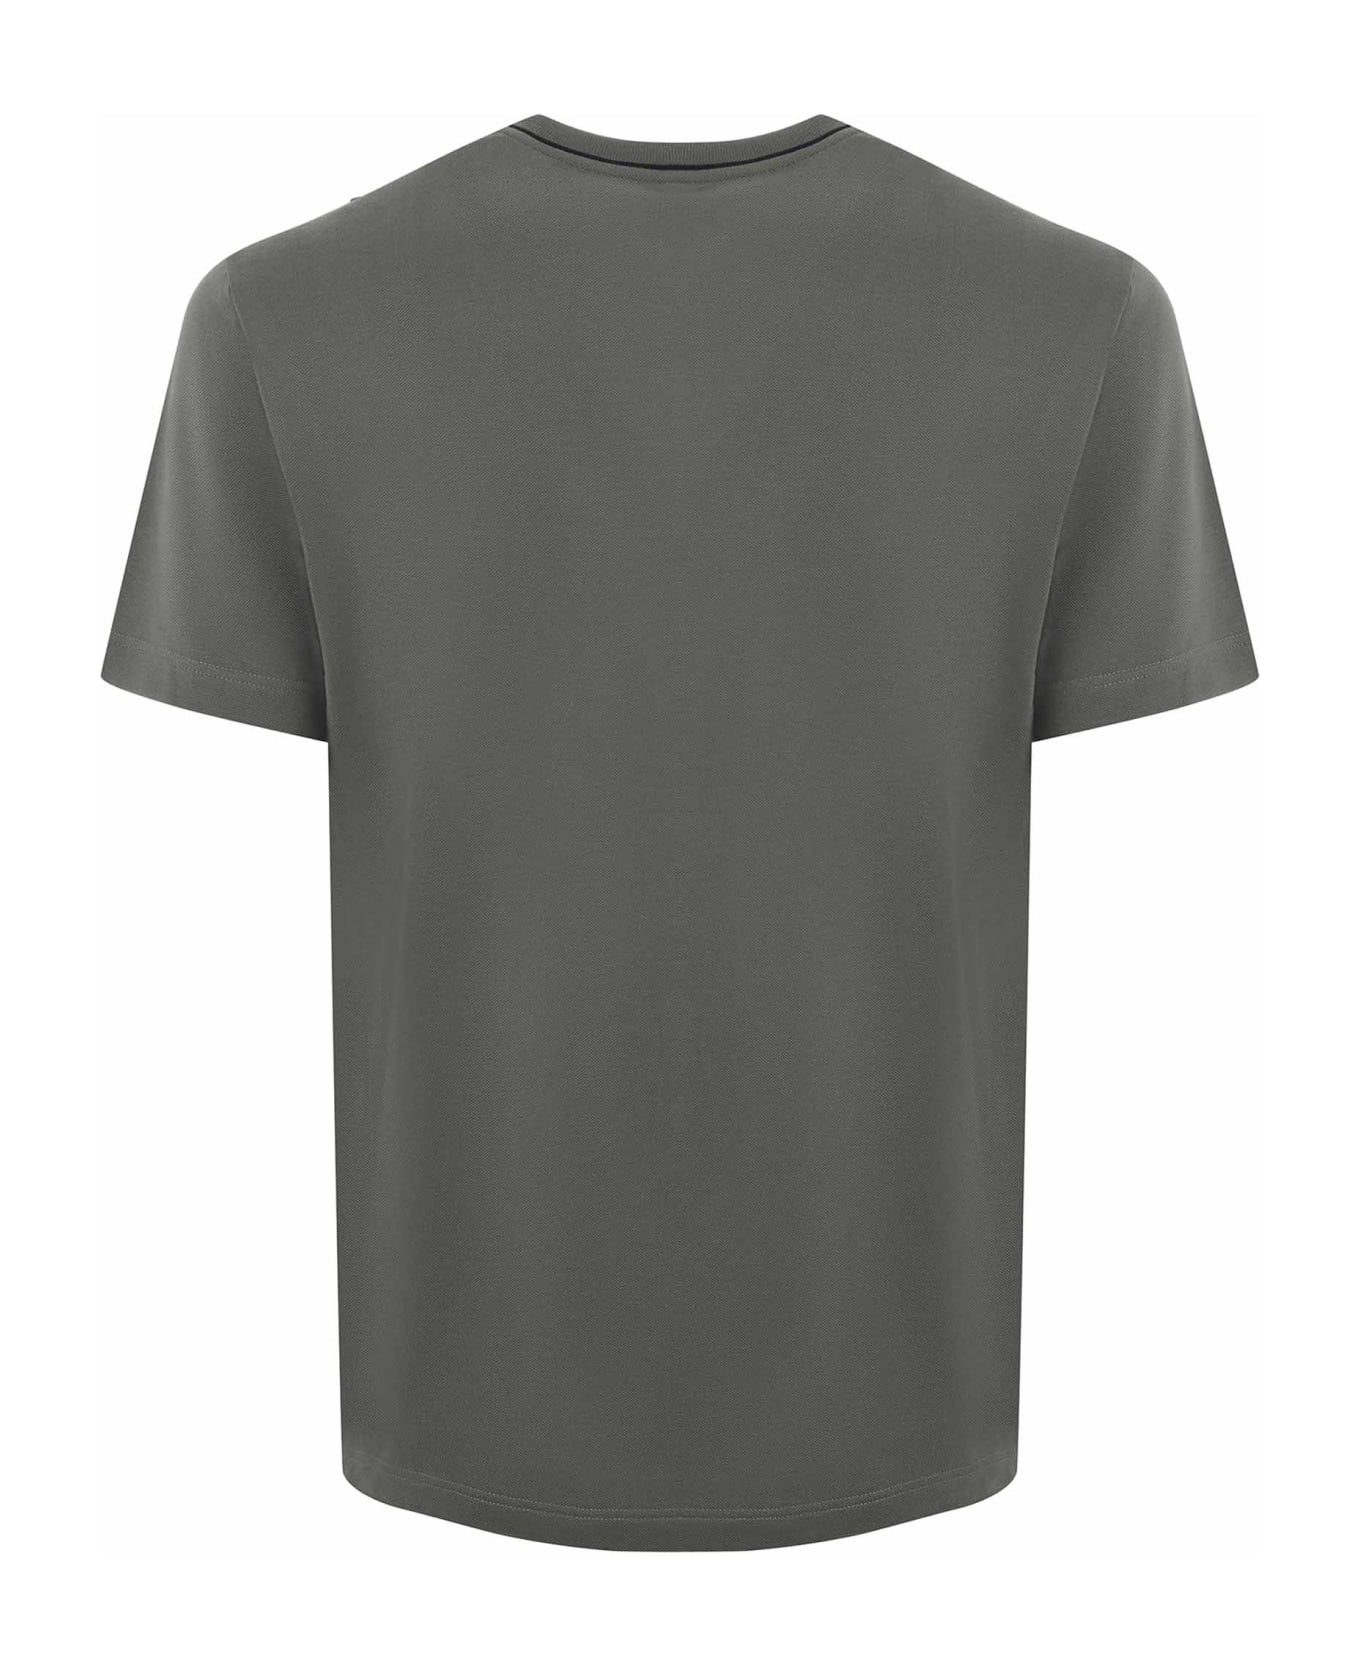 Lacoste T-shirt - Verde militare シャツ